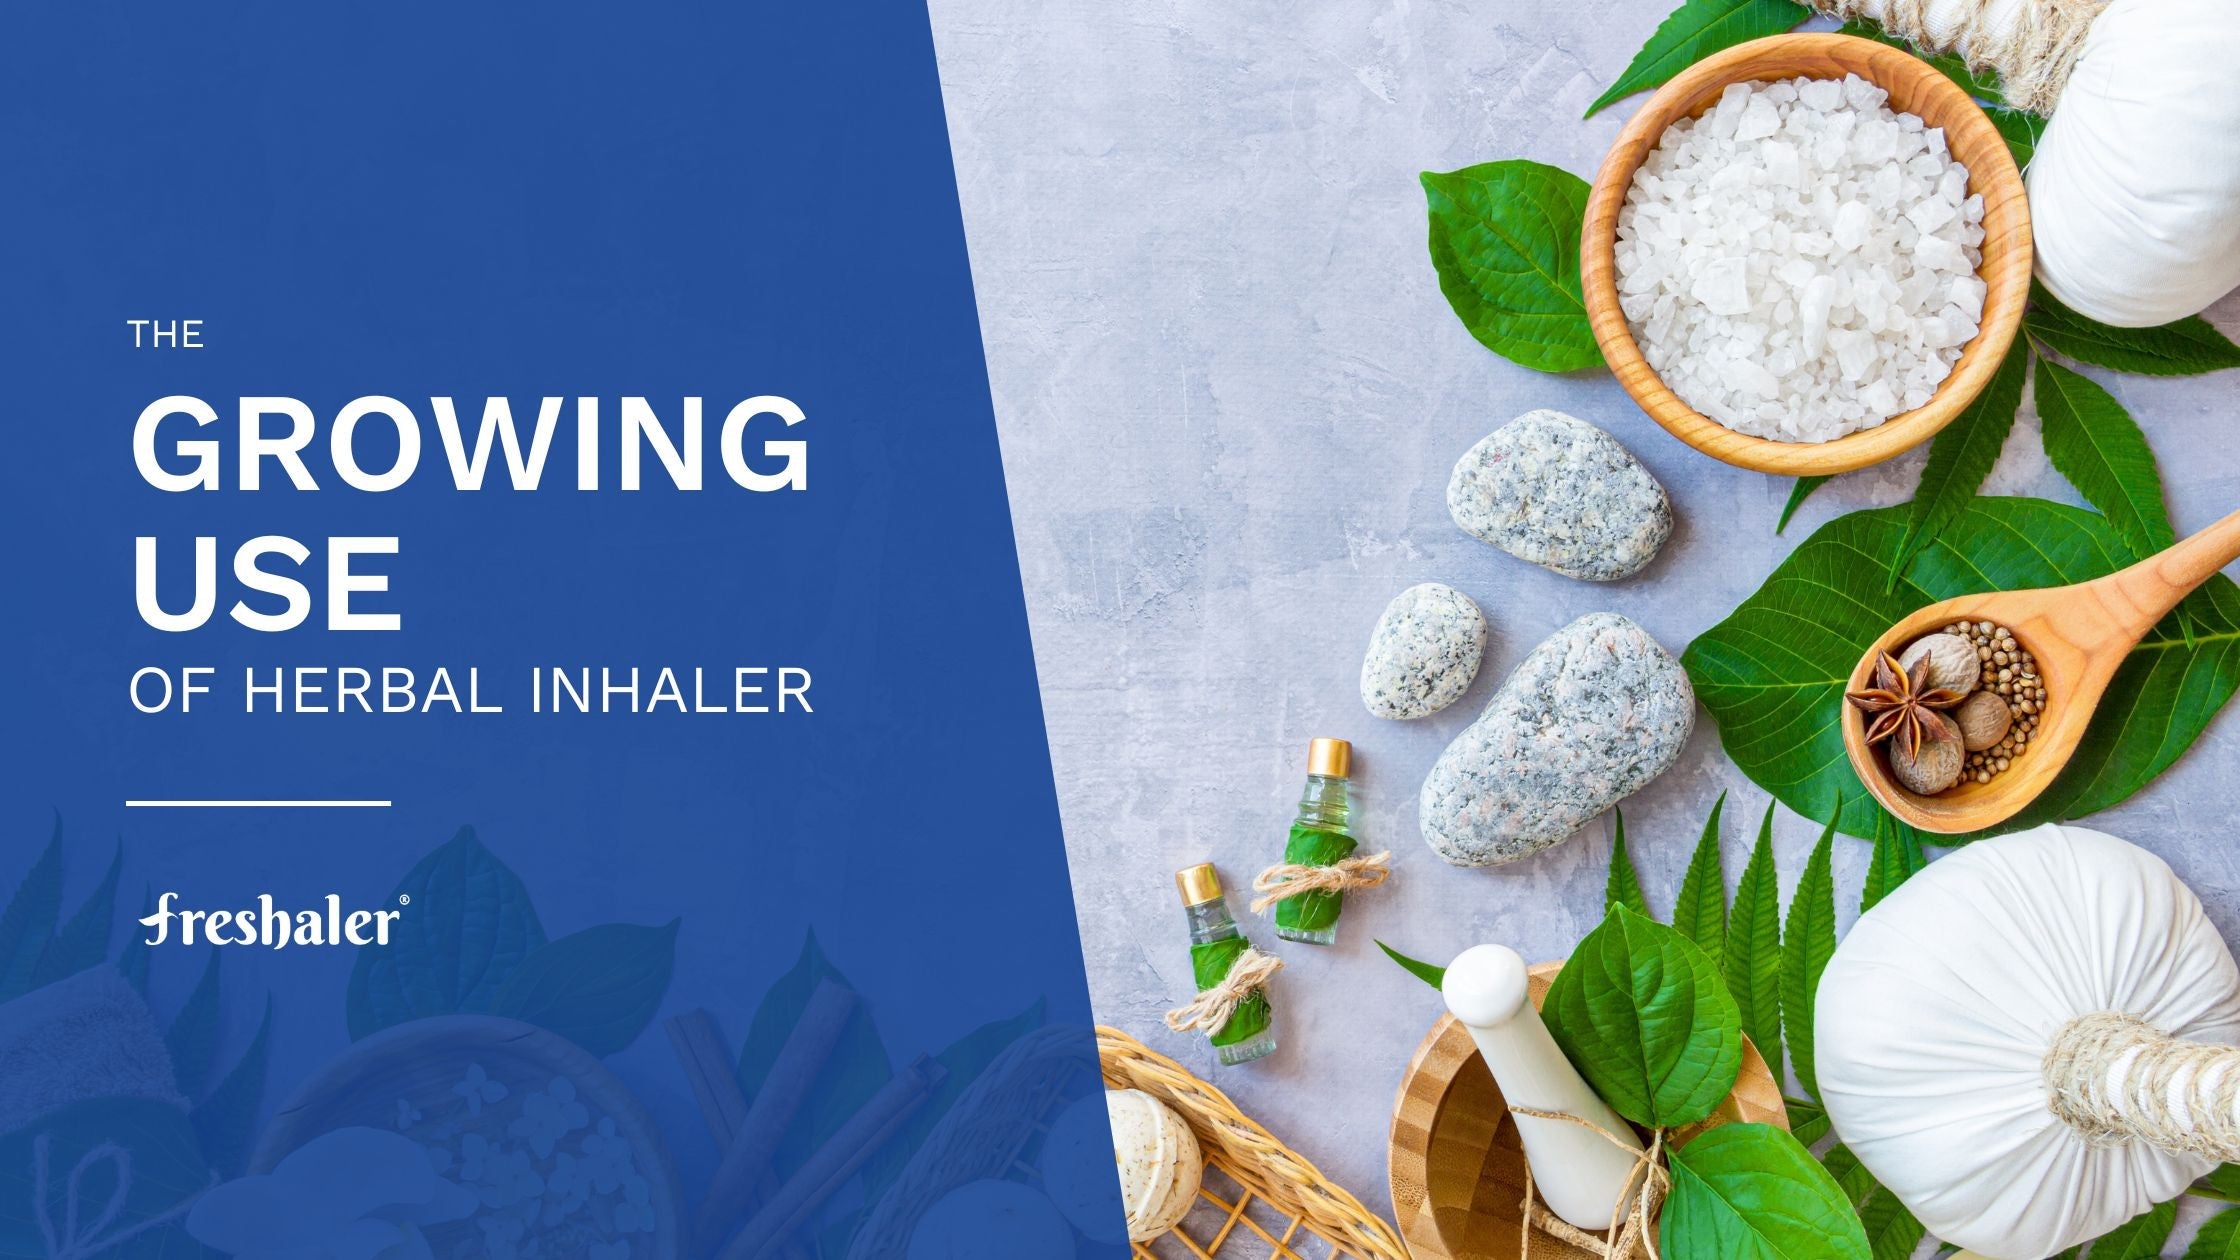 The growing use of Herbal Inhaler